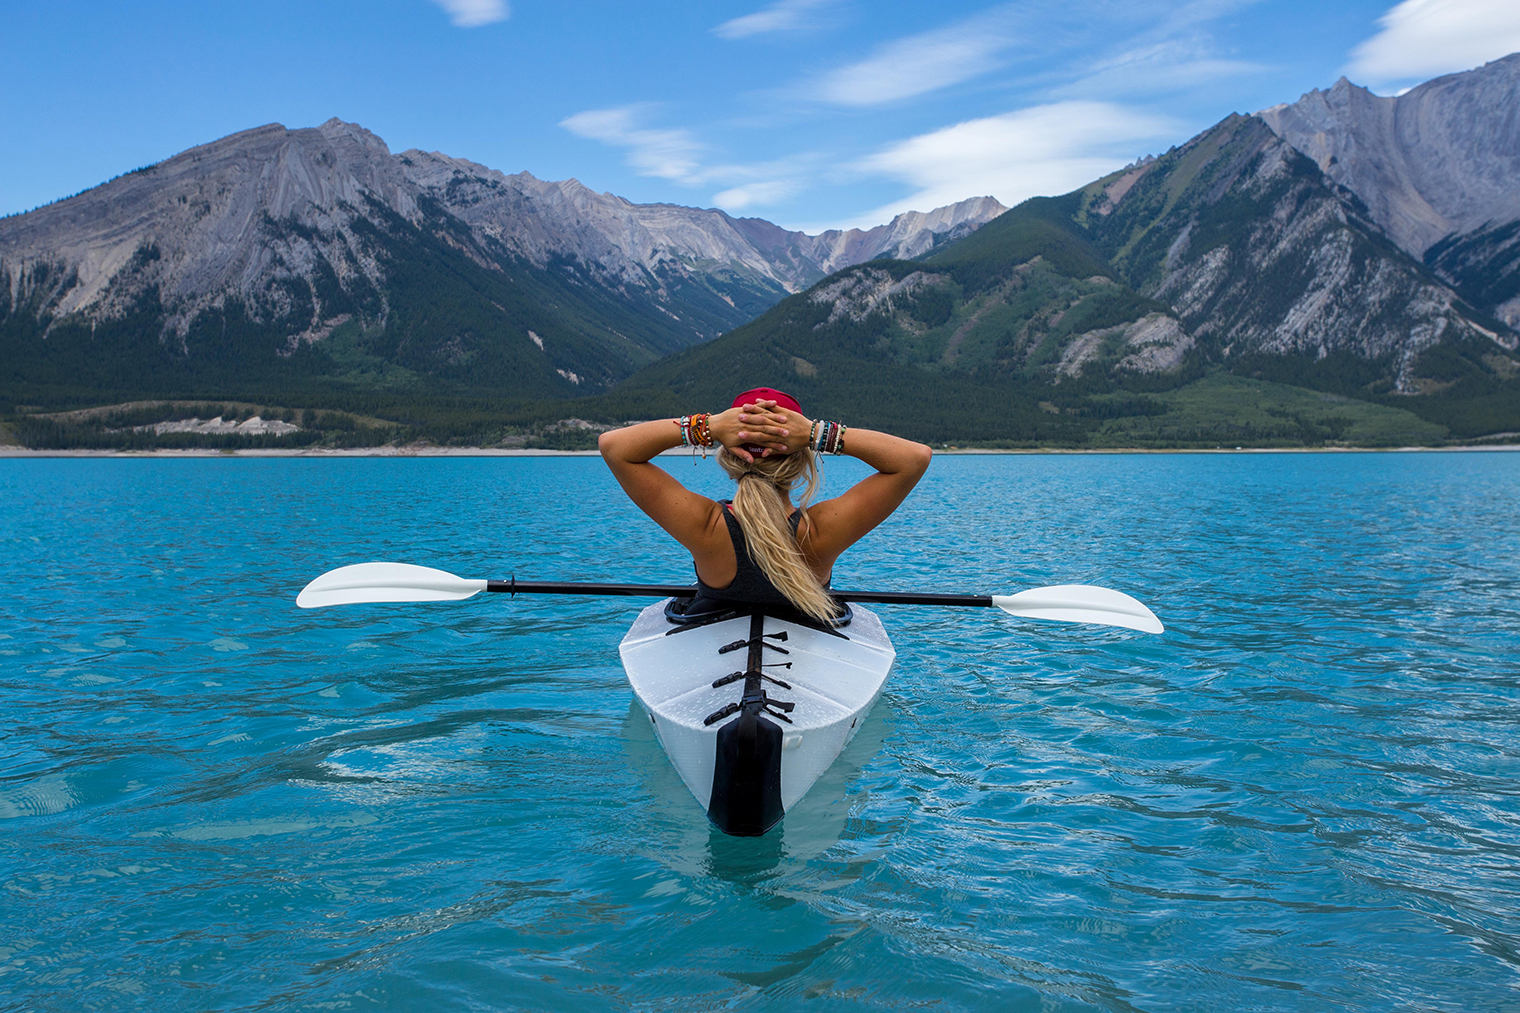 Woman in kayak on a mountain lake